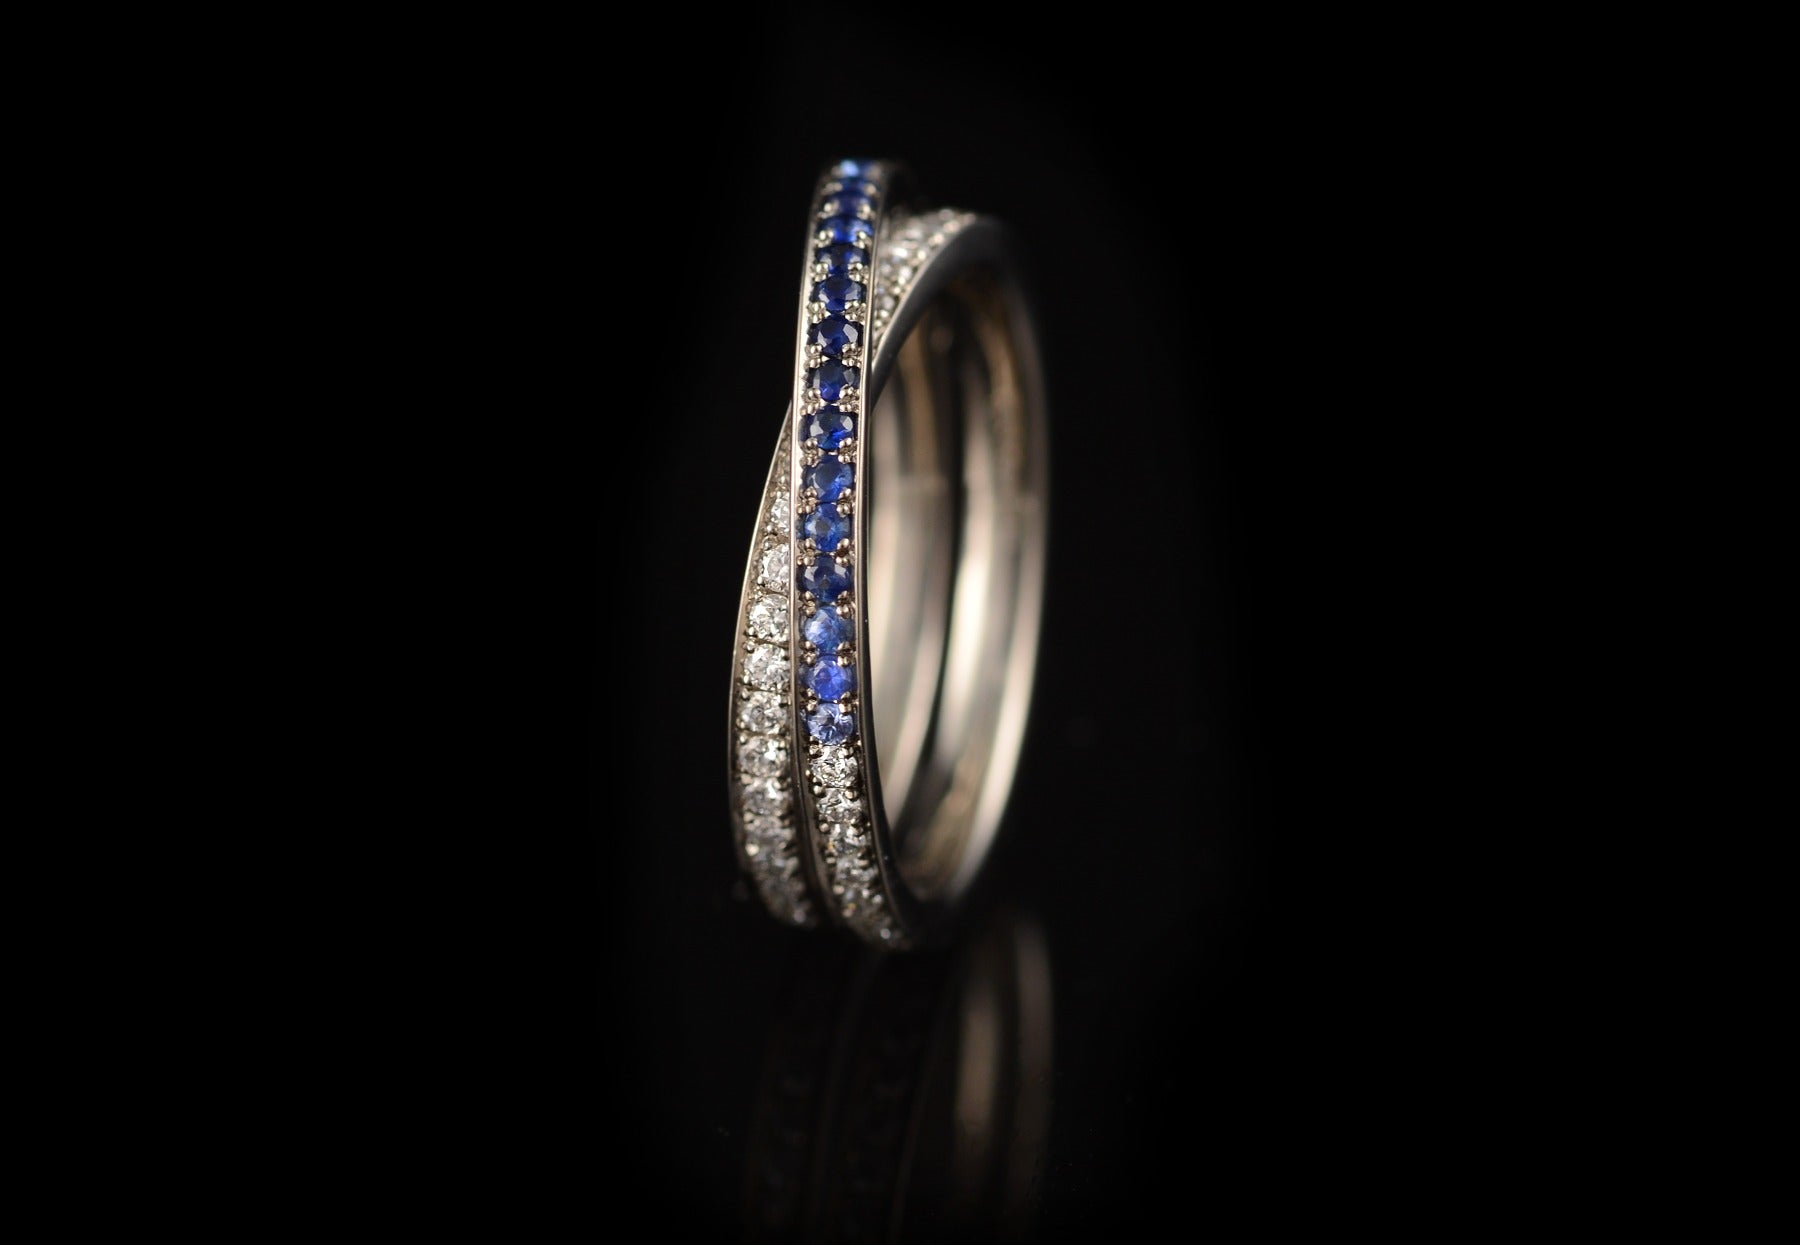 Wrapover blue sapphire and white diamond eternity ring